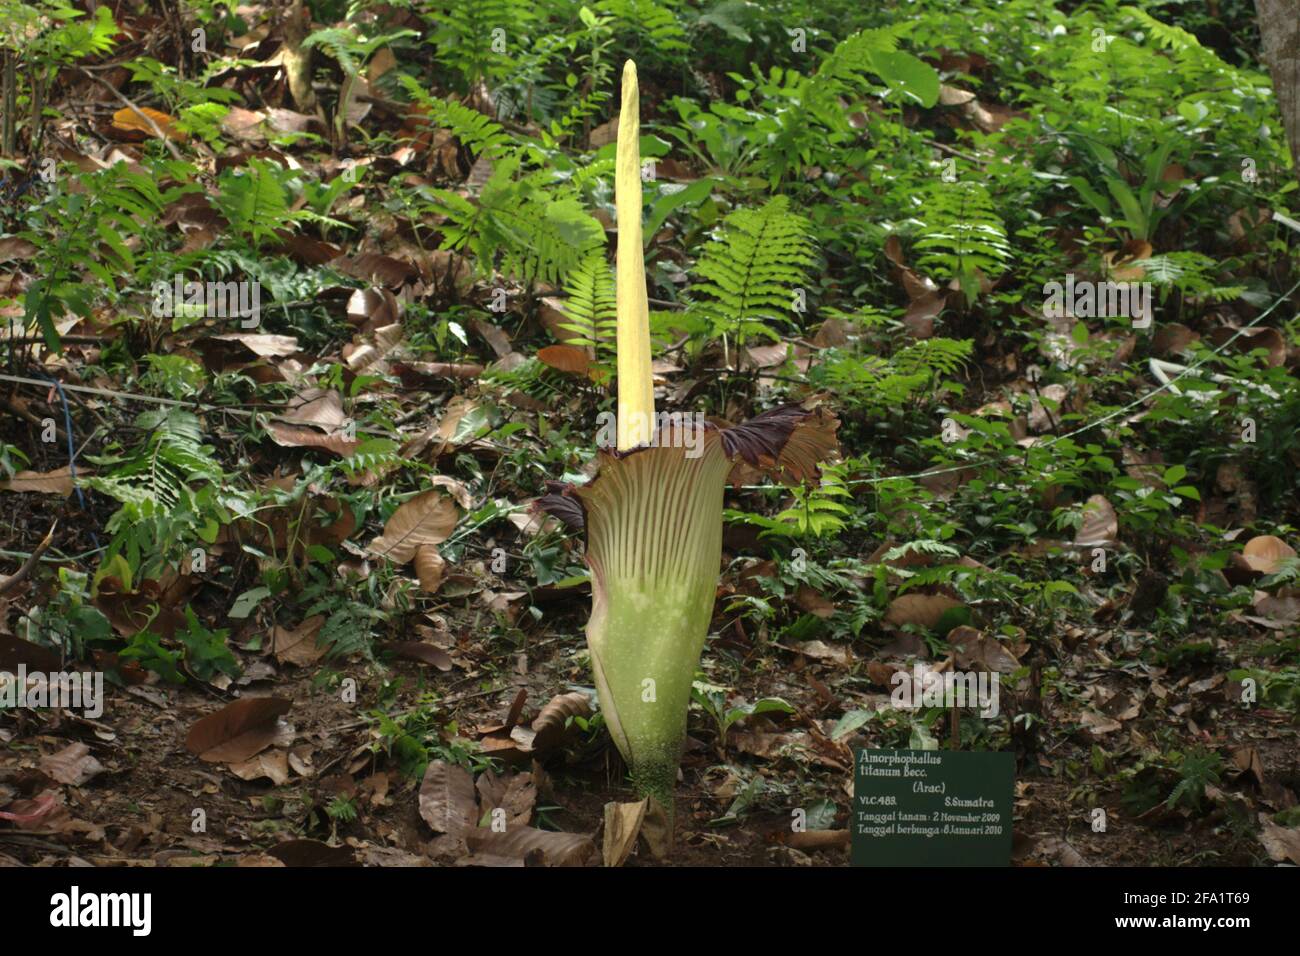 L'arum di Titan (Amorphophallus titanum) di origine sudafricana sta fiorendo ai giardini botanici di Bogor, Bogor, Giava Occidentale, Indonesia. Foto Stock